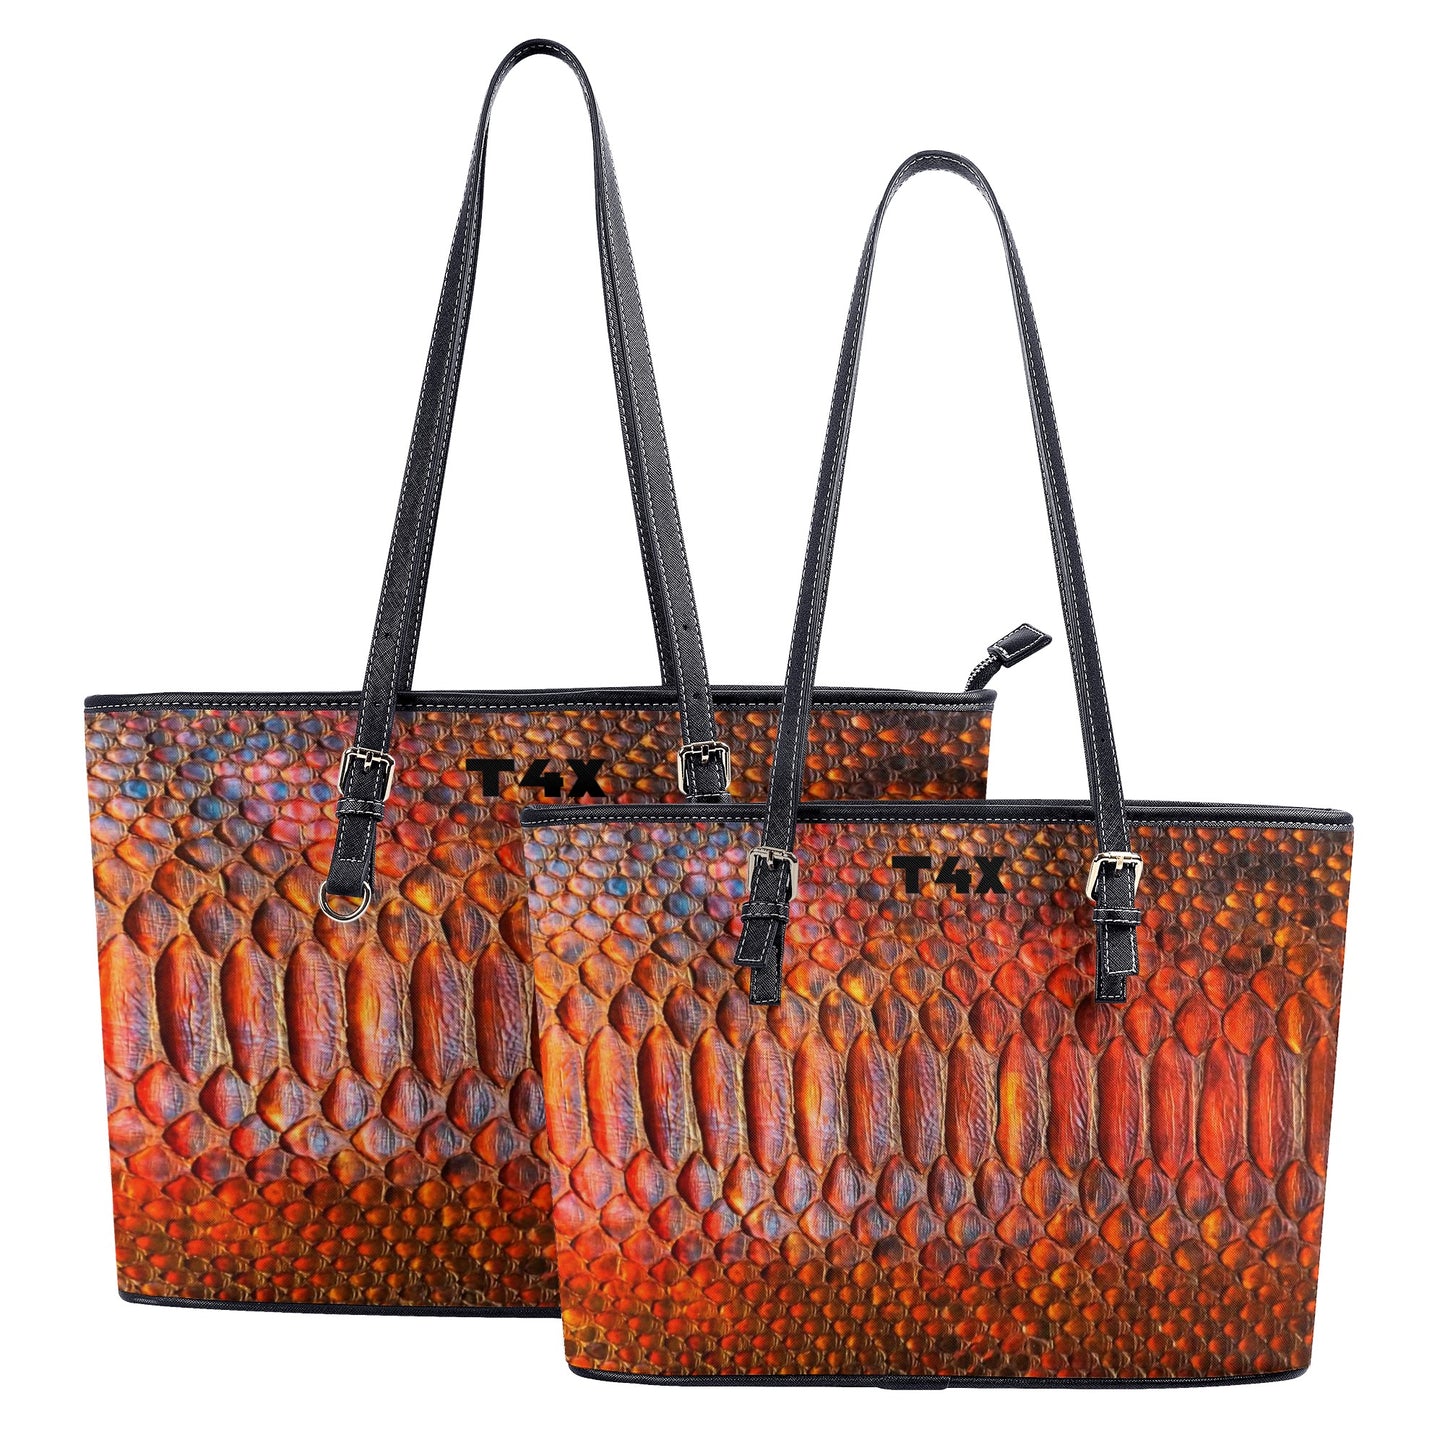 T4x Orange Leather Tote Bags